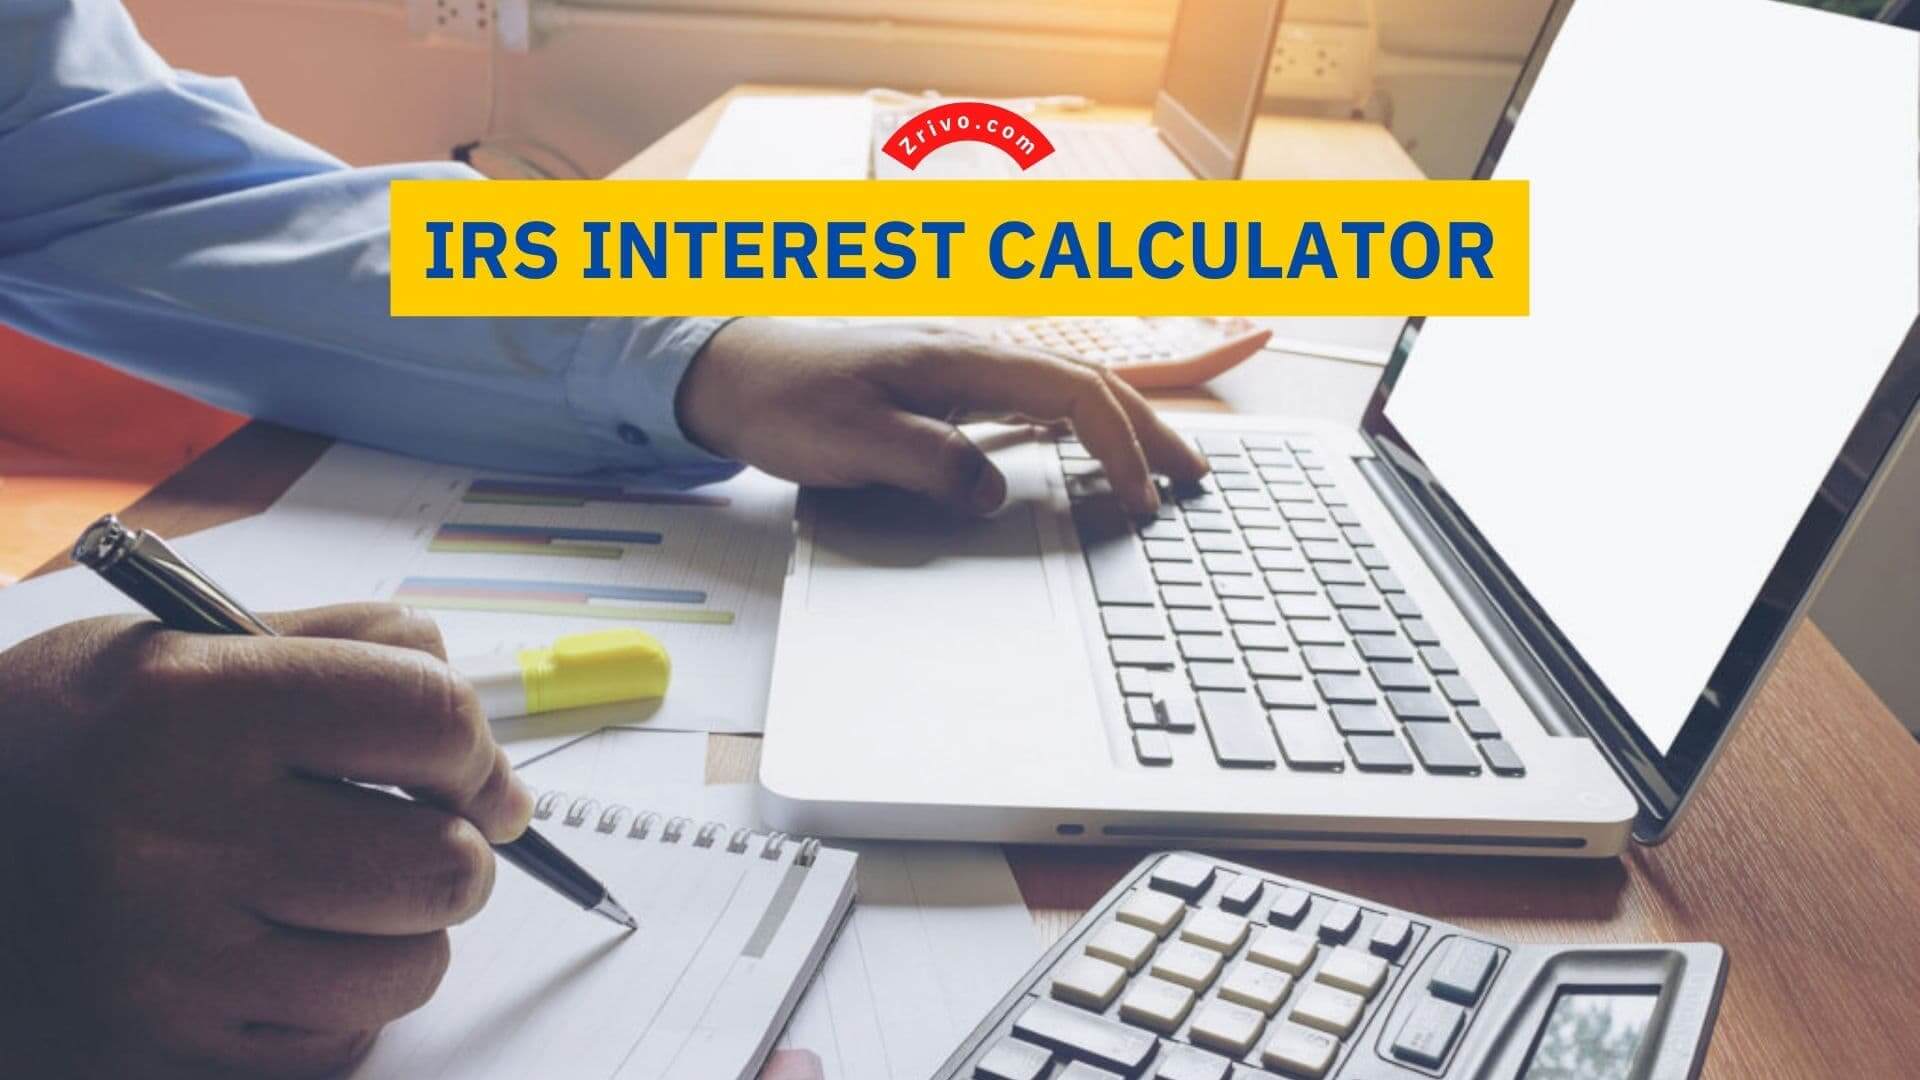 IRS Interest Calculator